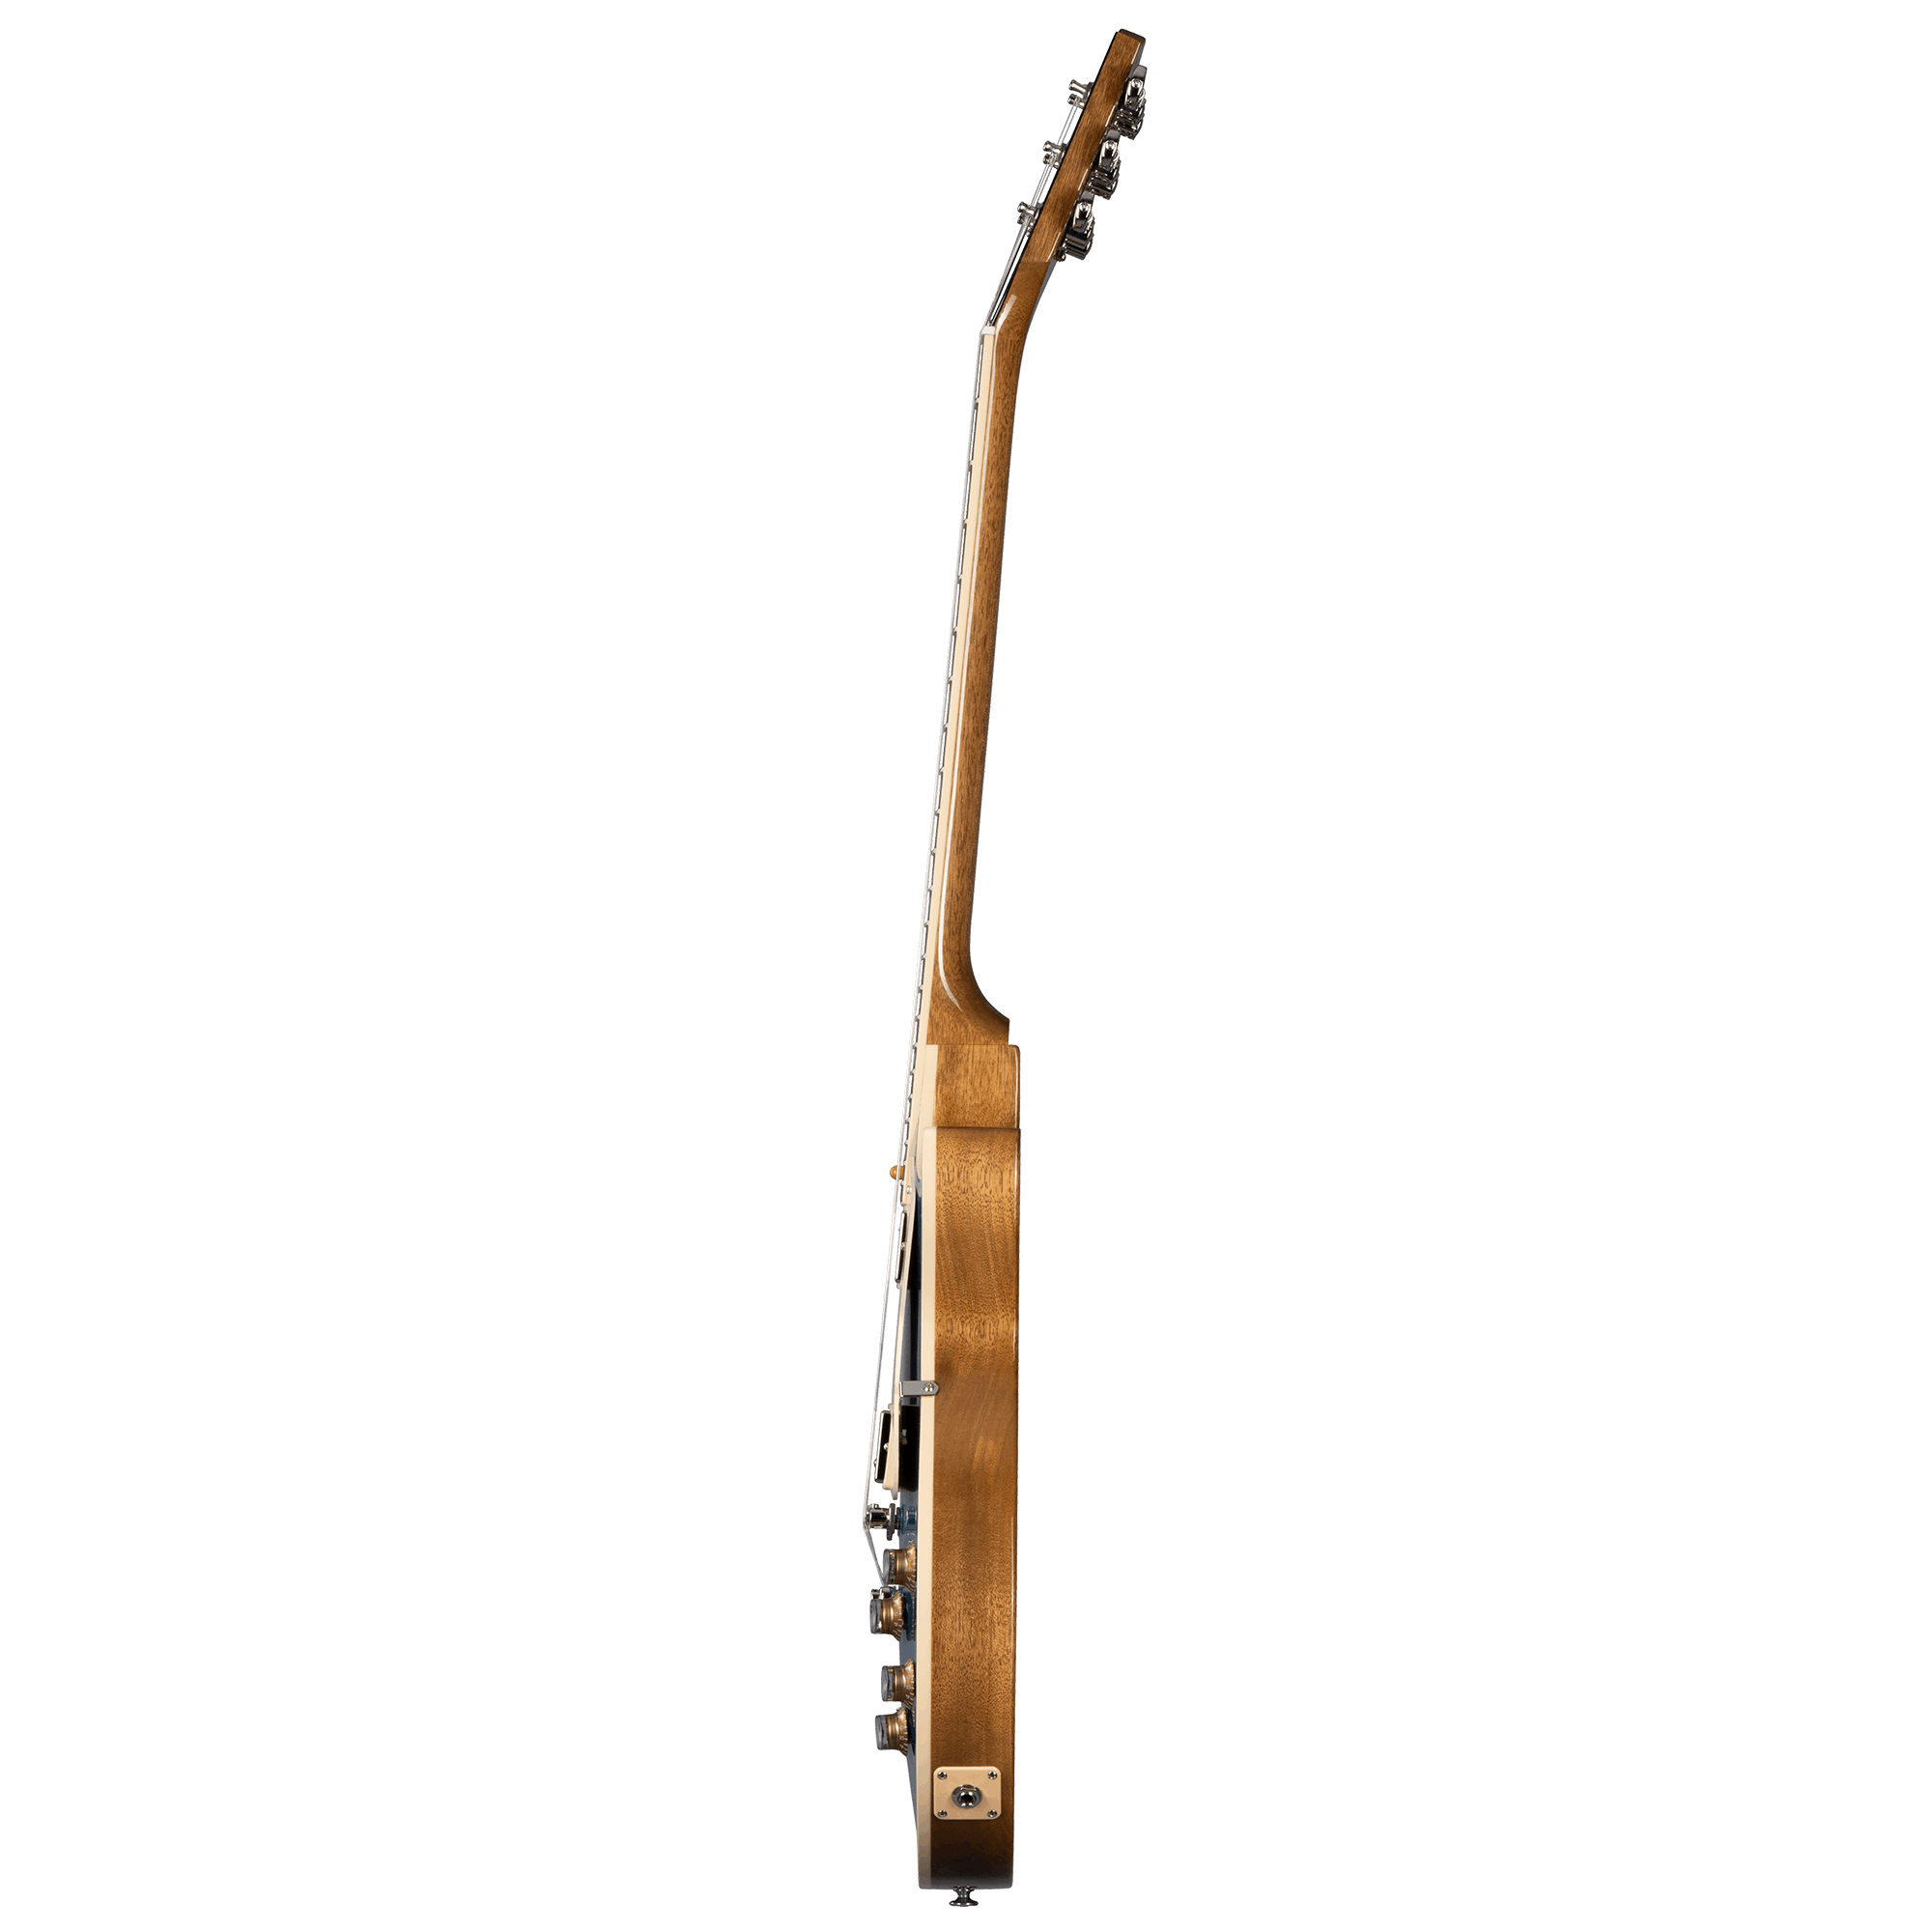 Gibson Les Paul Standard 60s Plain Top Electric Guitar - Pelham Blue